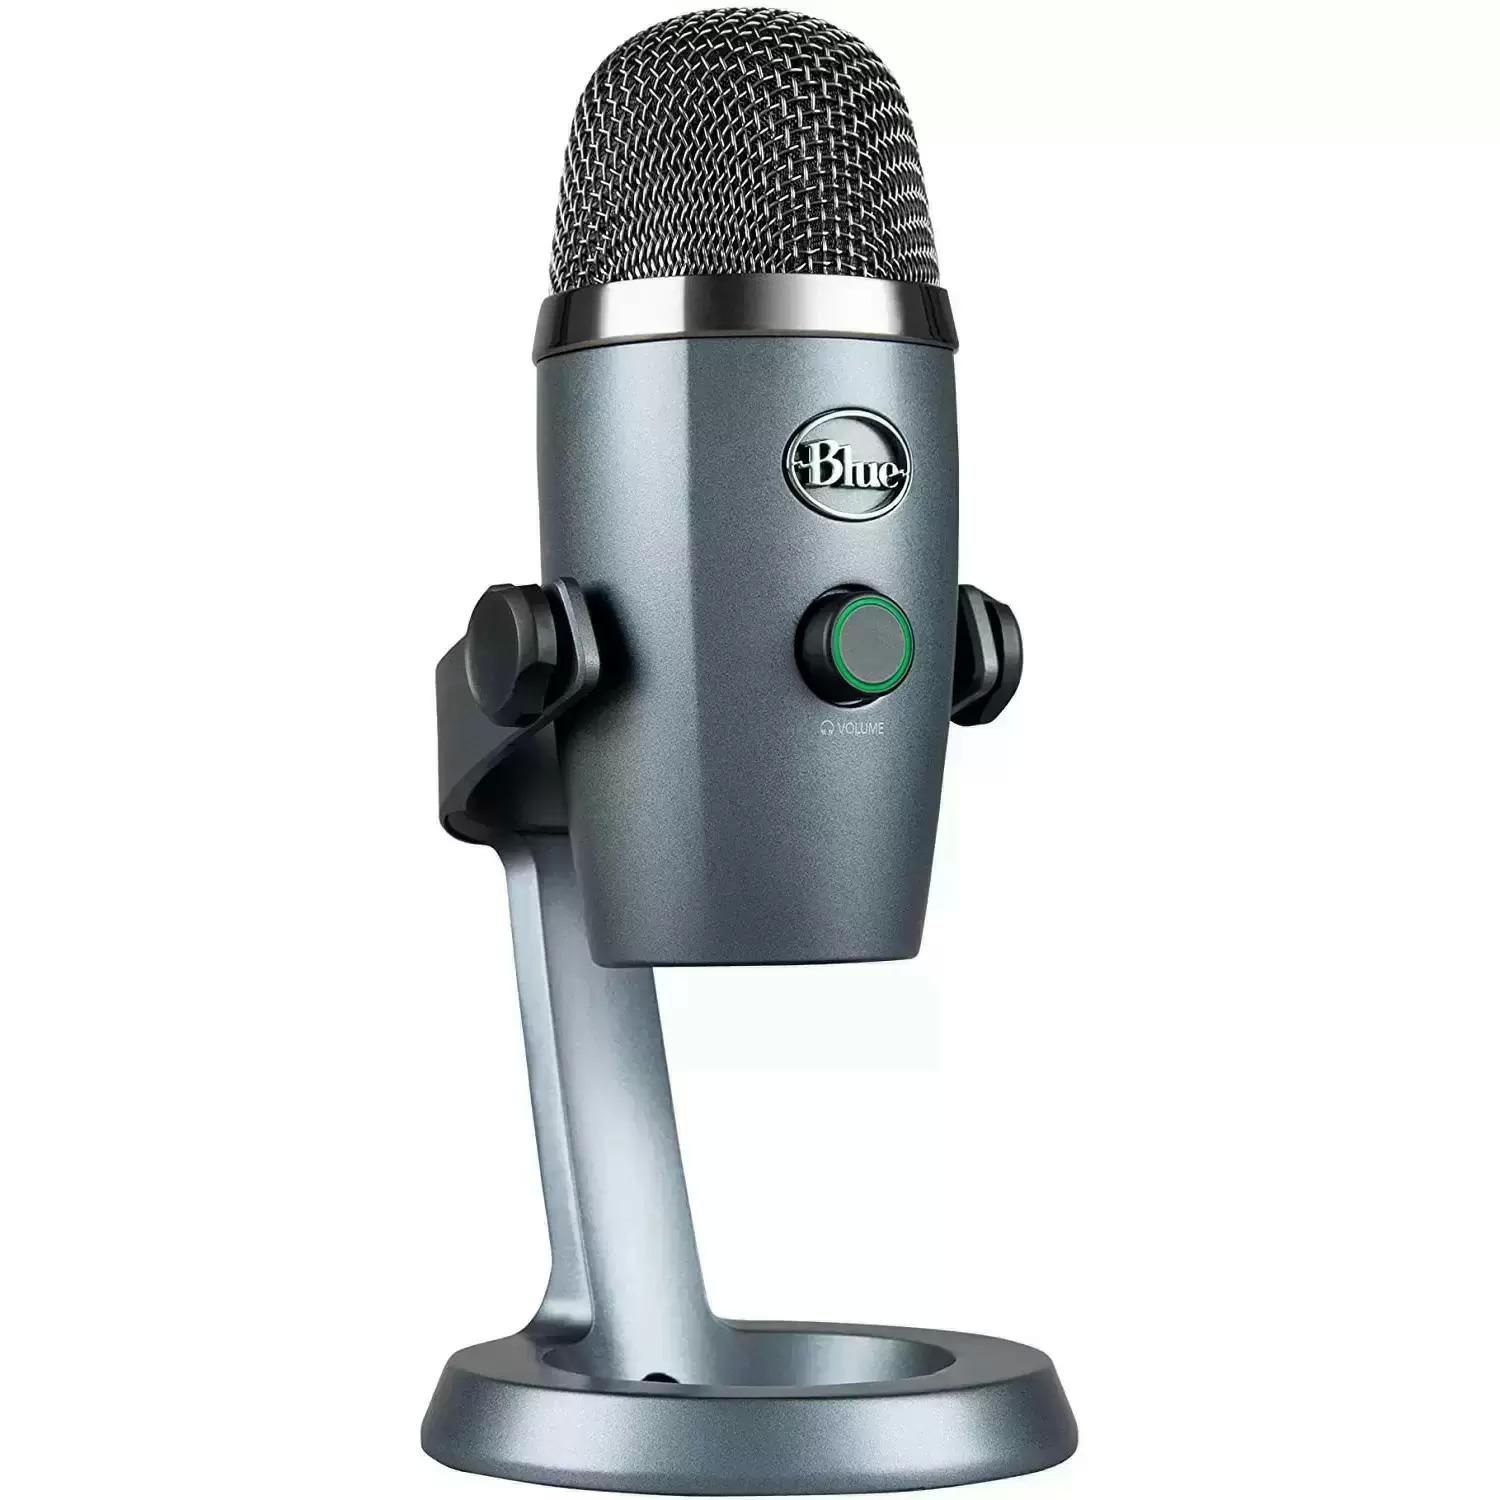 Blue Yeti Nano Premium USB Microphone in Shadow Grey for $69.99 Shipped